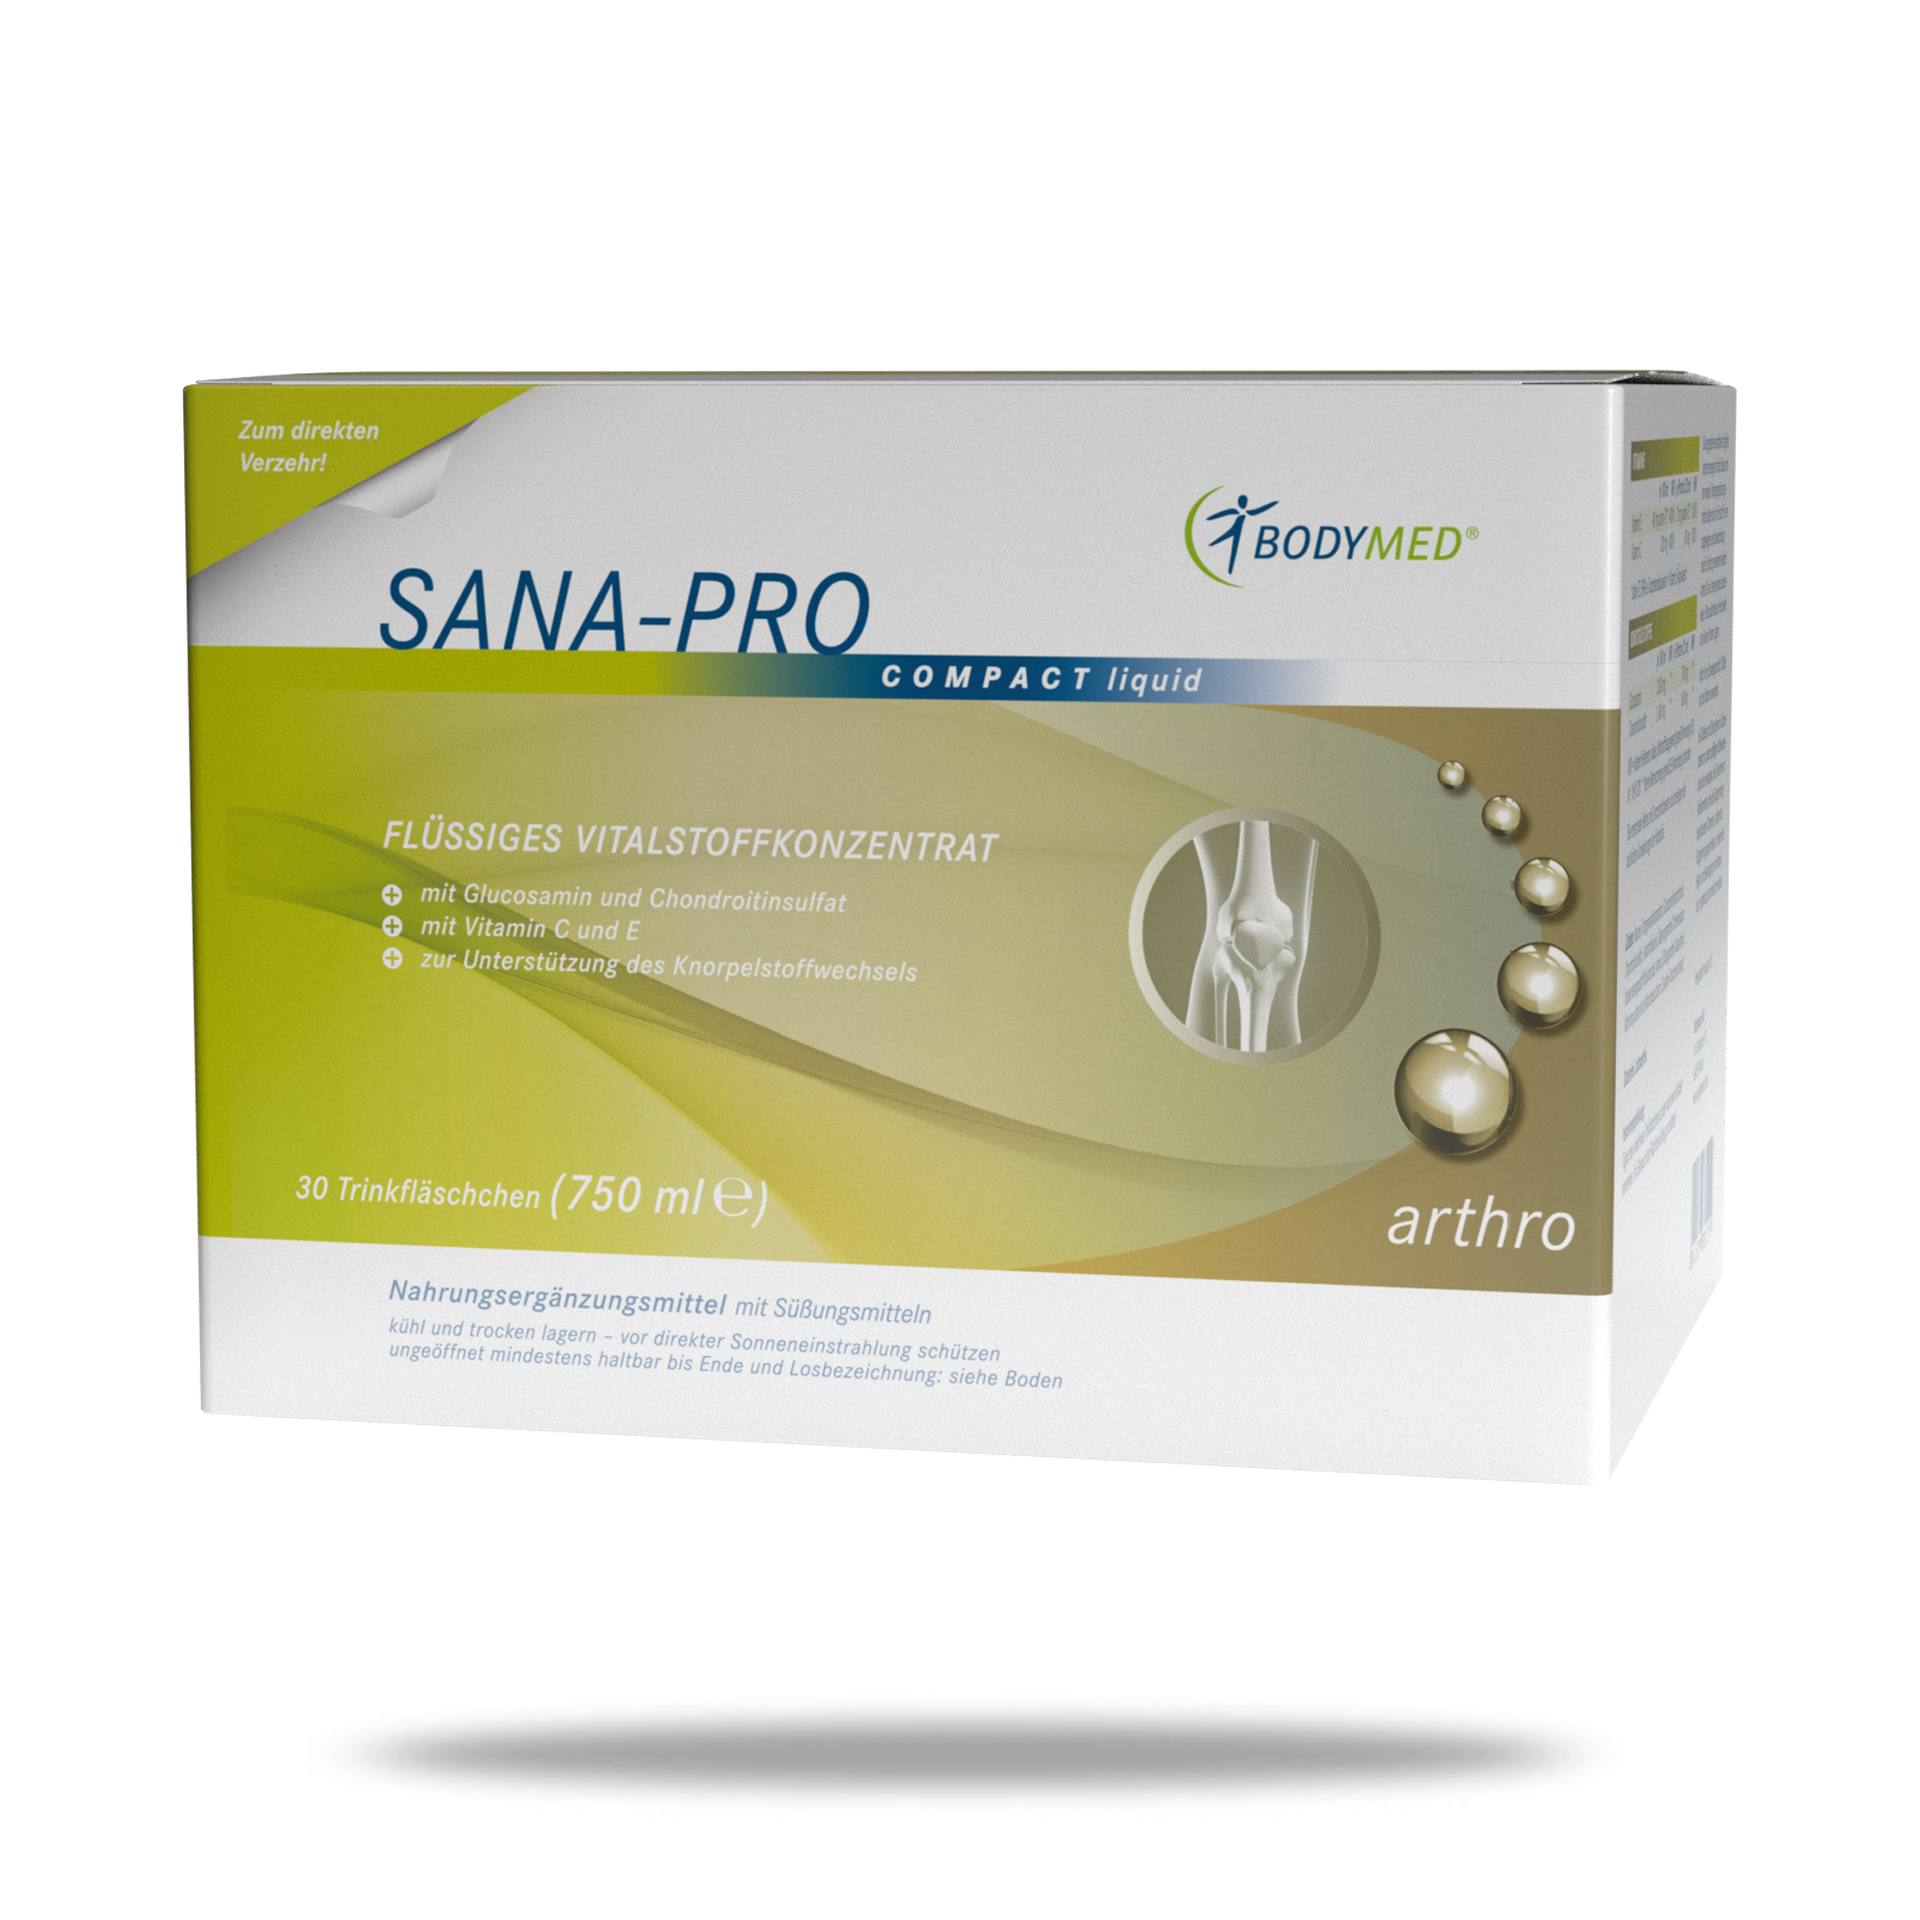 SANA-PRO COMPACT liquid arthro - MHD 04/2024